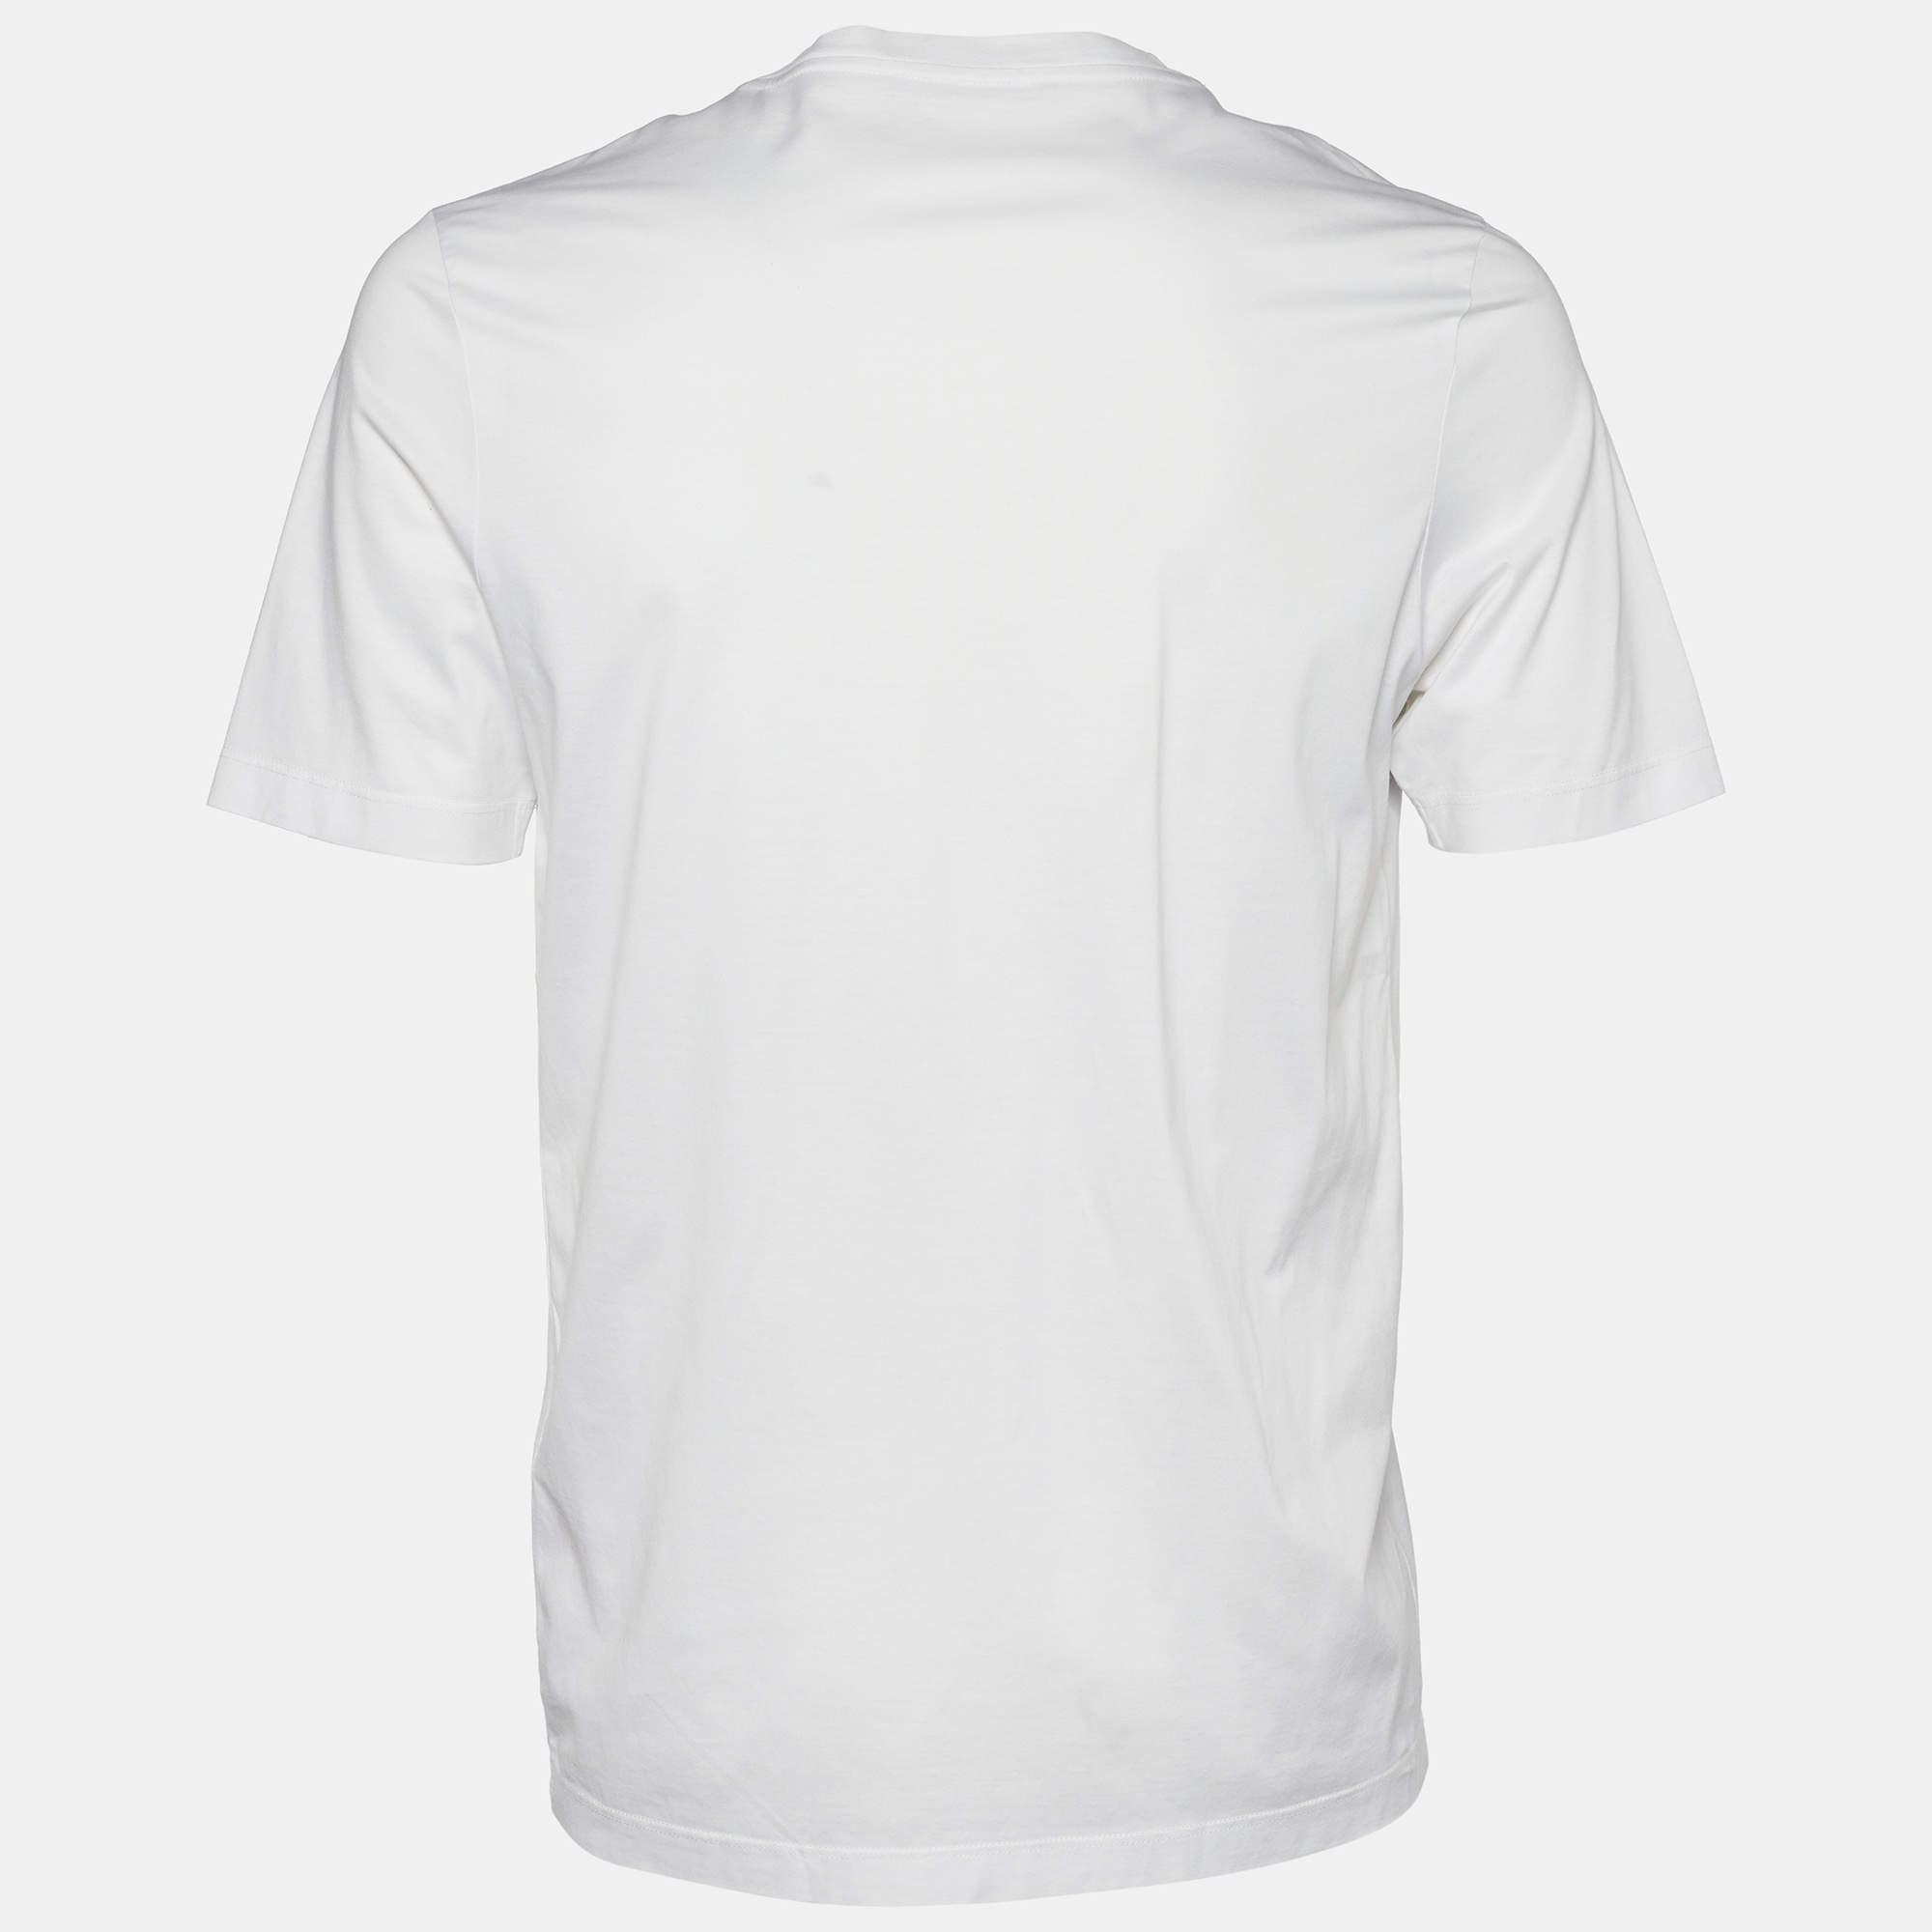 L~V LOUIS men's cotton polo jersey t-shirt shirt top S-XXXL MF495